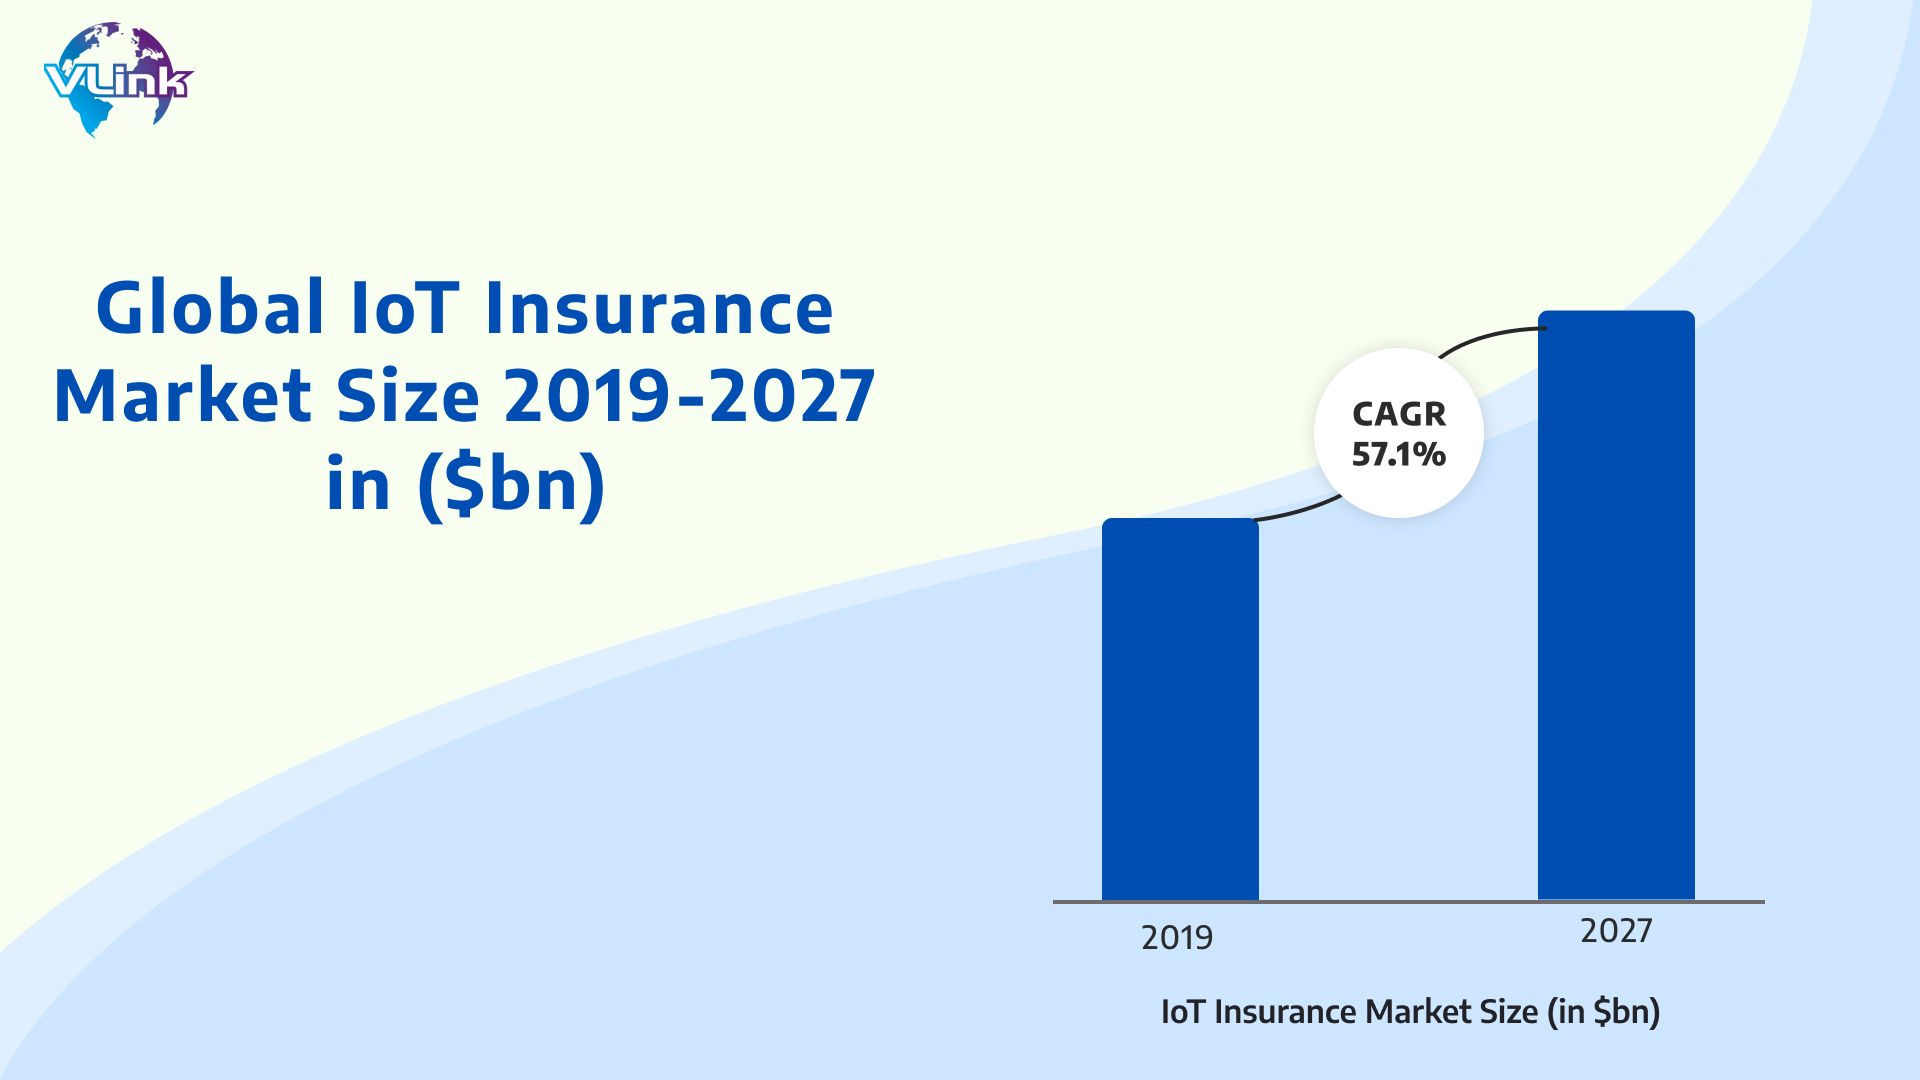 Global IOT Insurance Market Size